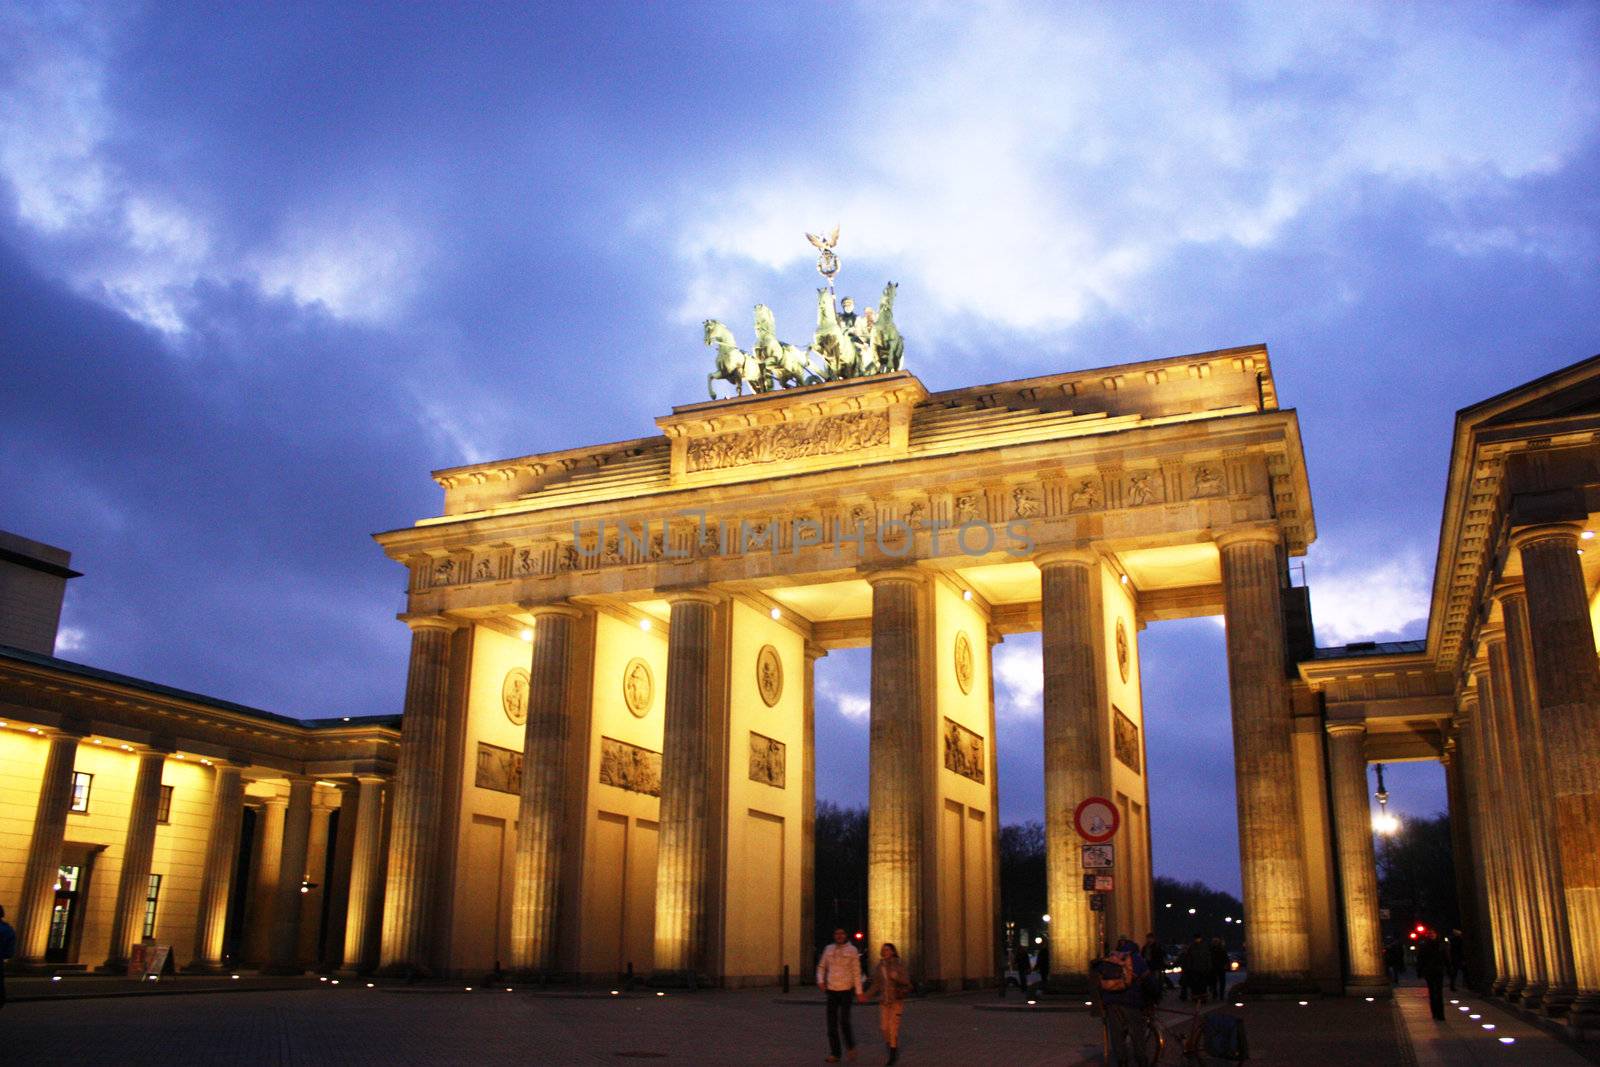 Brandenburg Gate at night,Berlin by photochecker